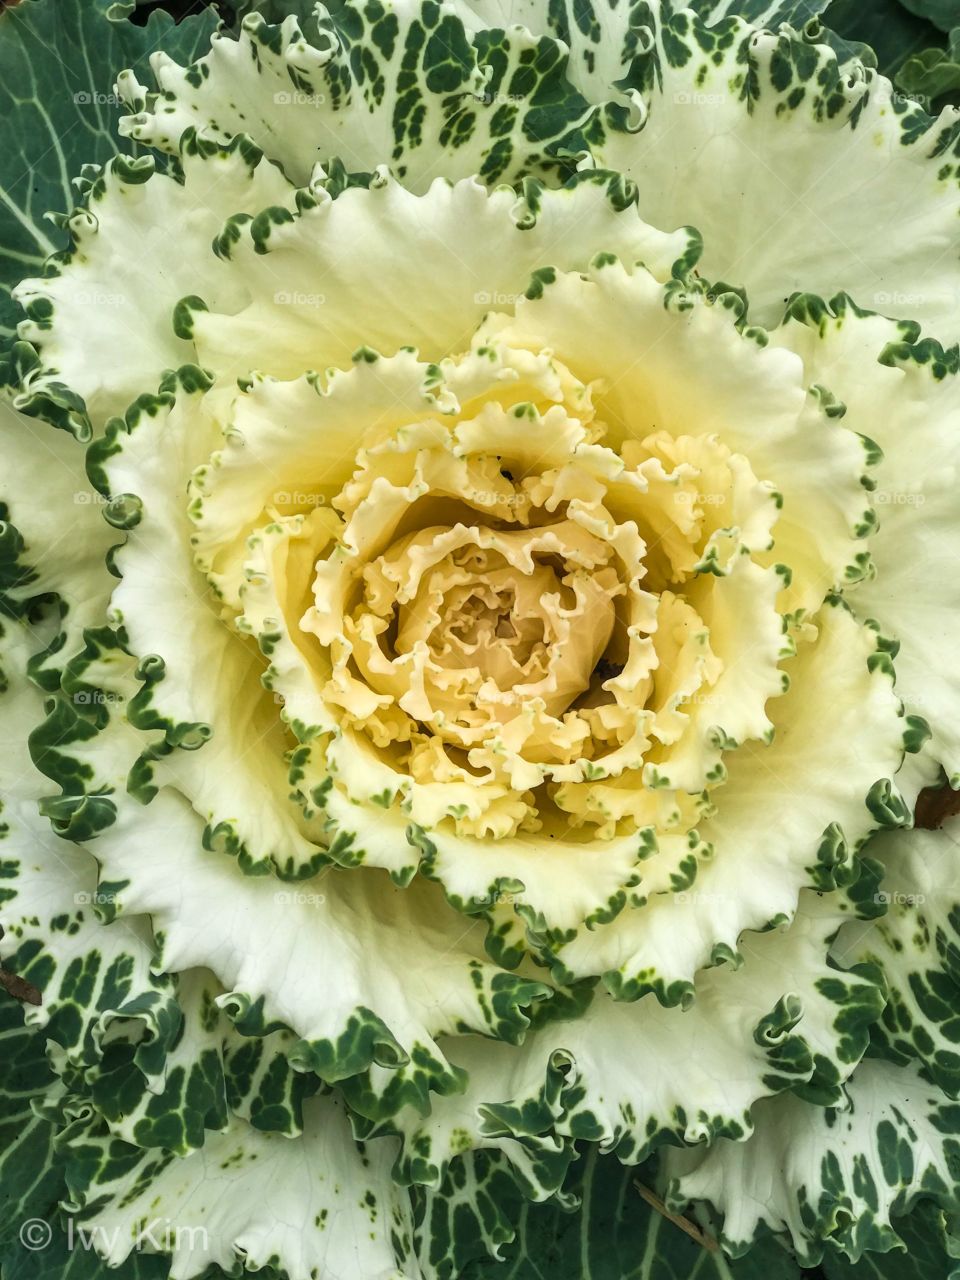 Not cabbage. Not lettuce.  It’s lettuce plant